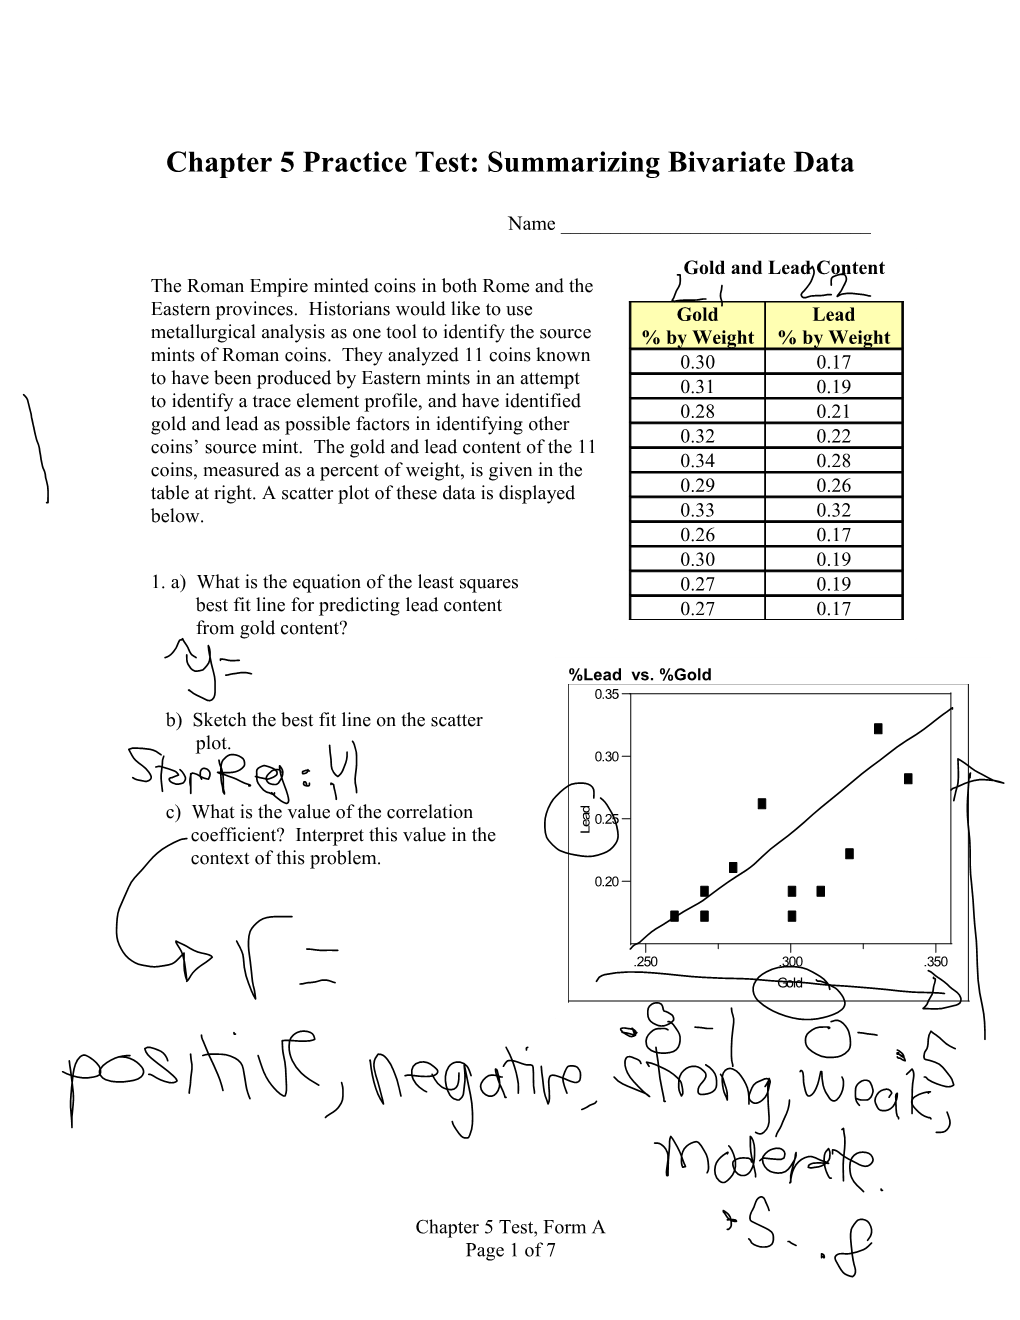 Chapter 5 Practice Test: Summarizing Bivariate Data